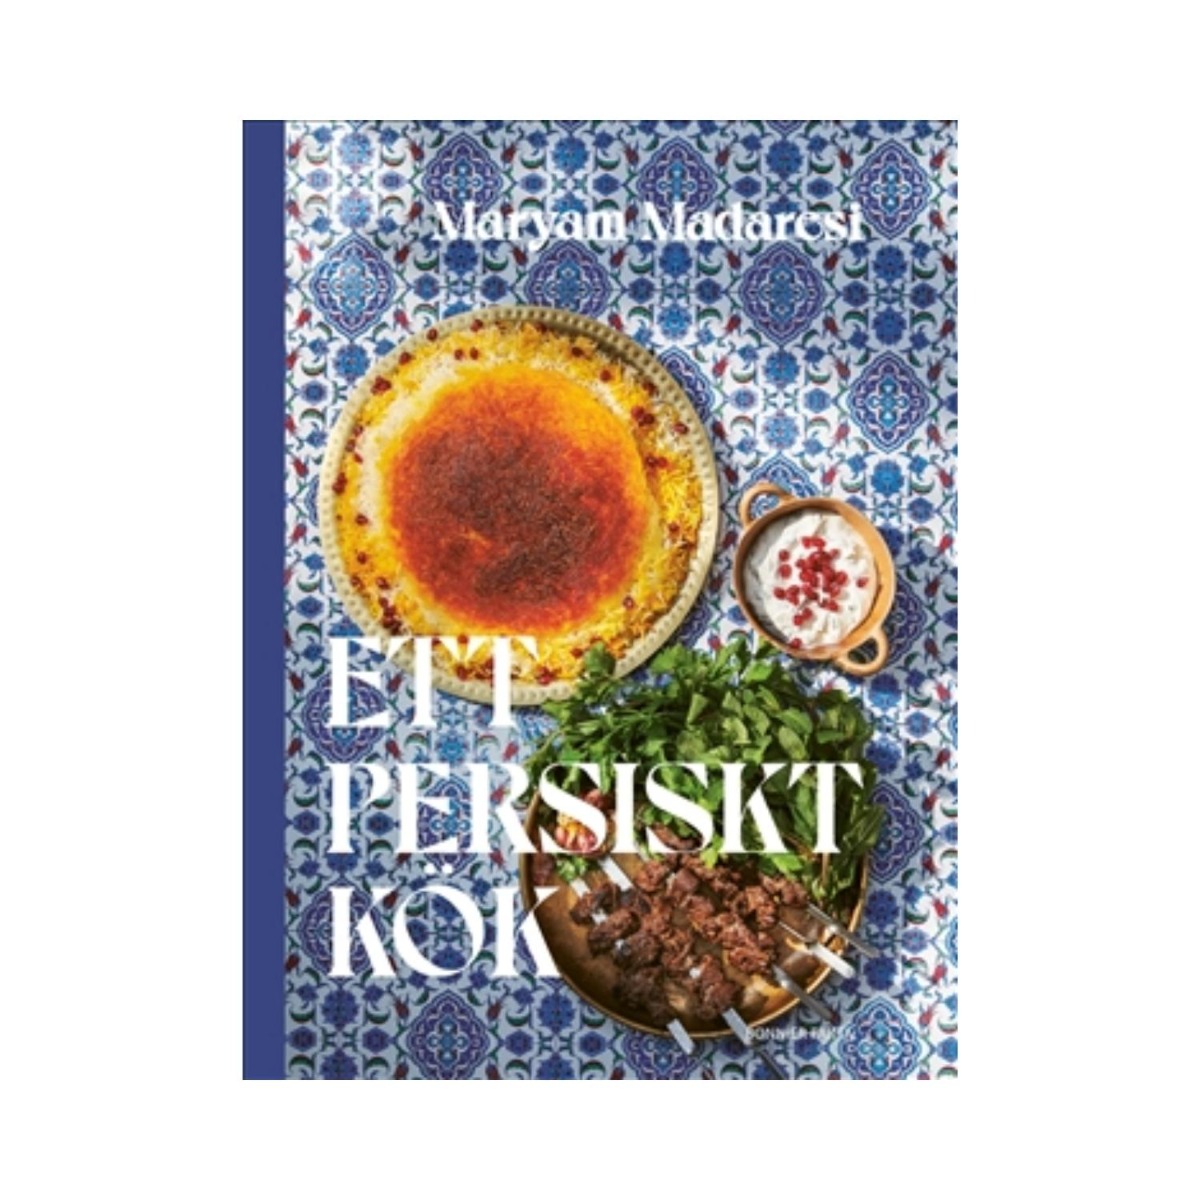 Bonnier Bok Ett persiskt kök av Maryam Madaresi